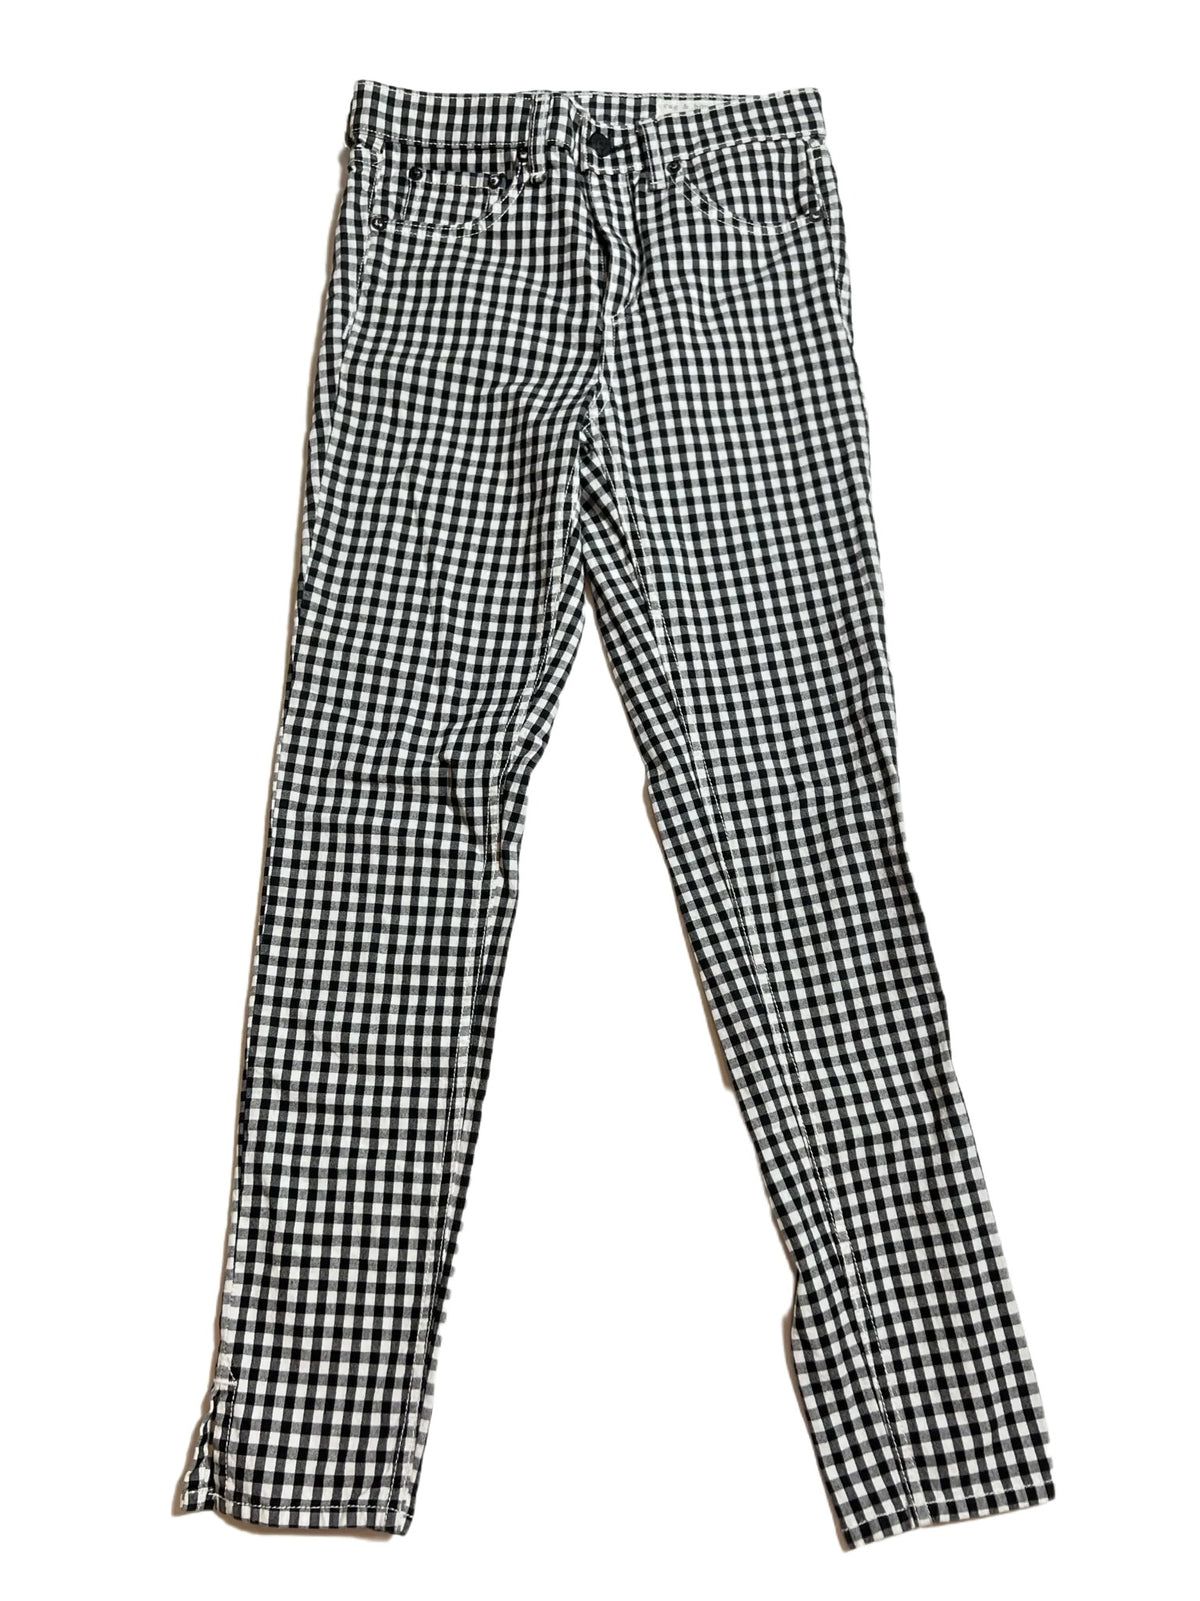 Rag & Bone- Black and White Checkered "10in Capri" Jeans